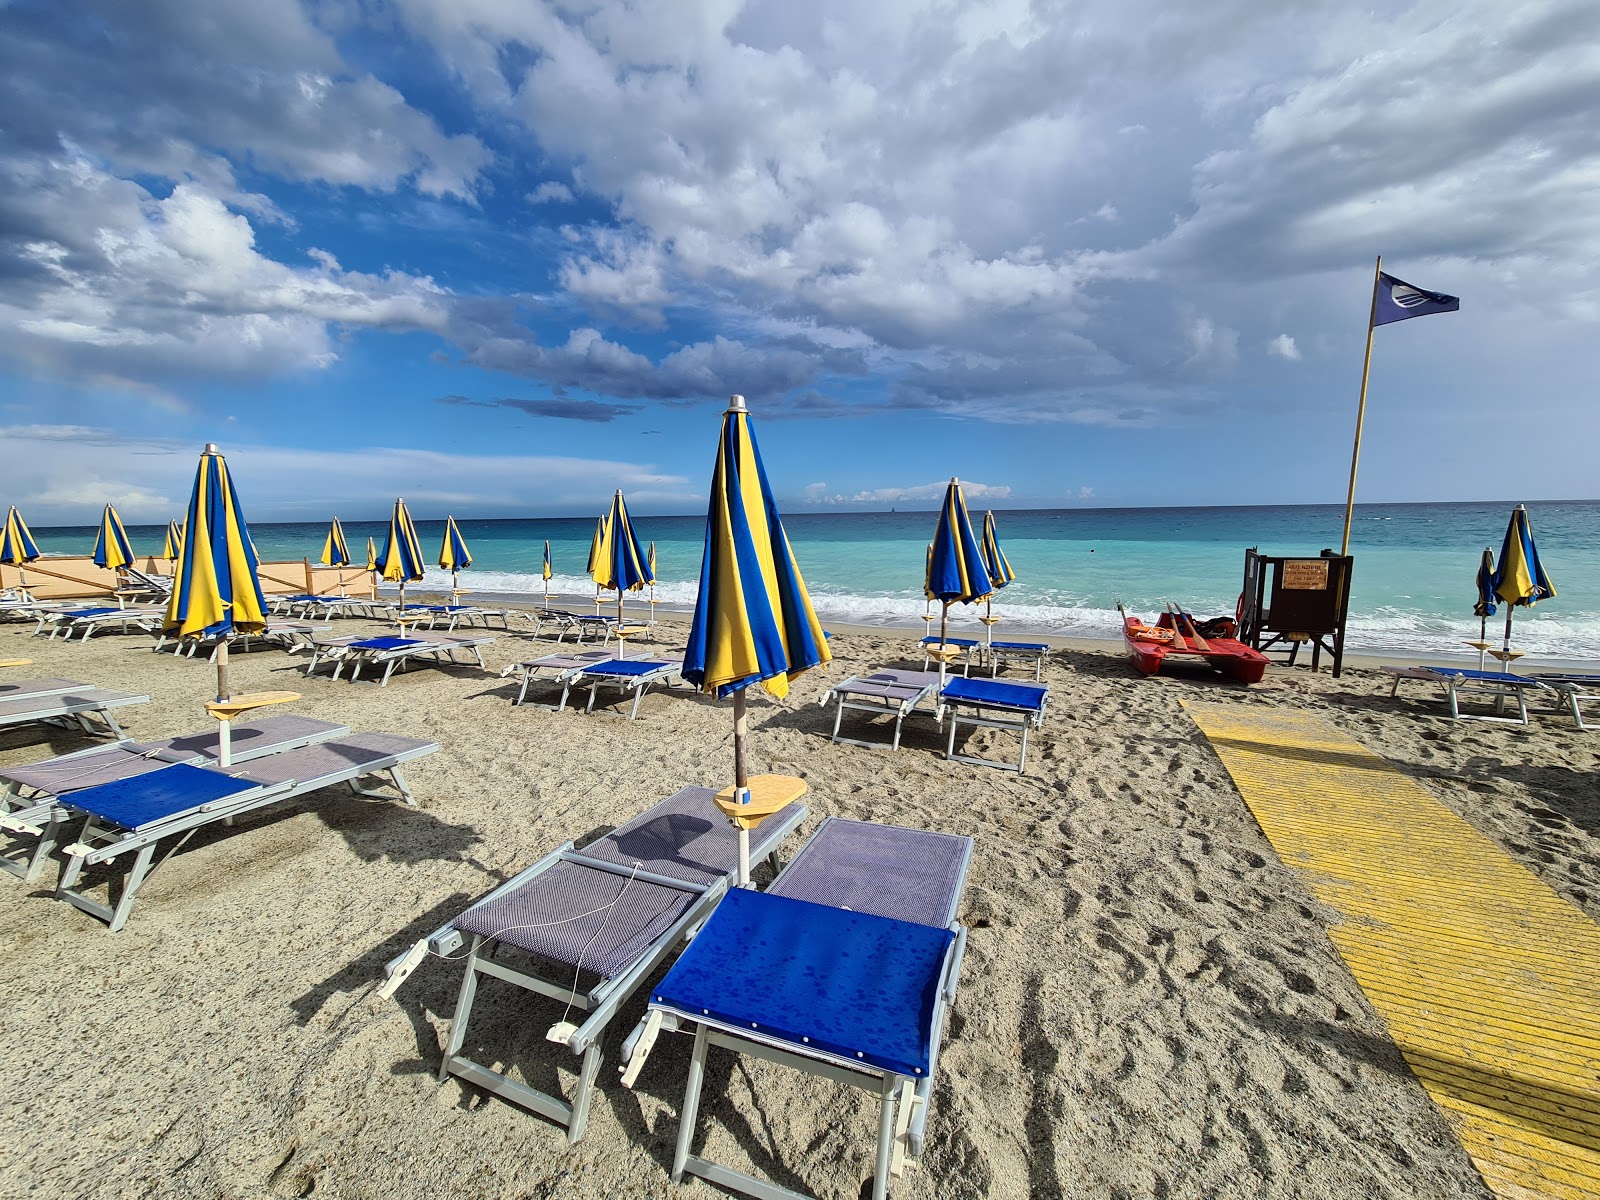 Fotografie cu Spiaggia libera Attrezzata și așezarea